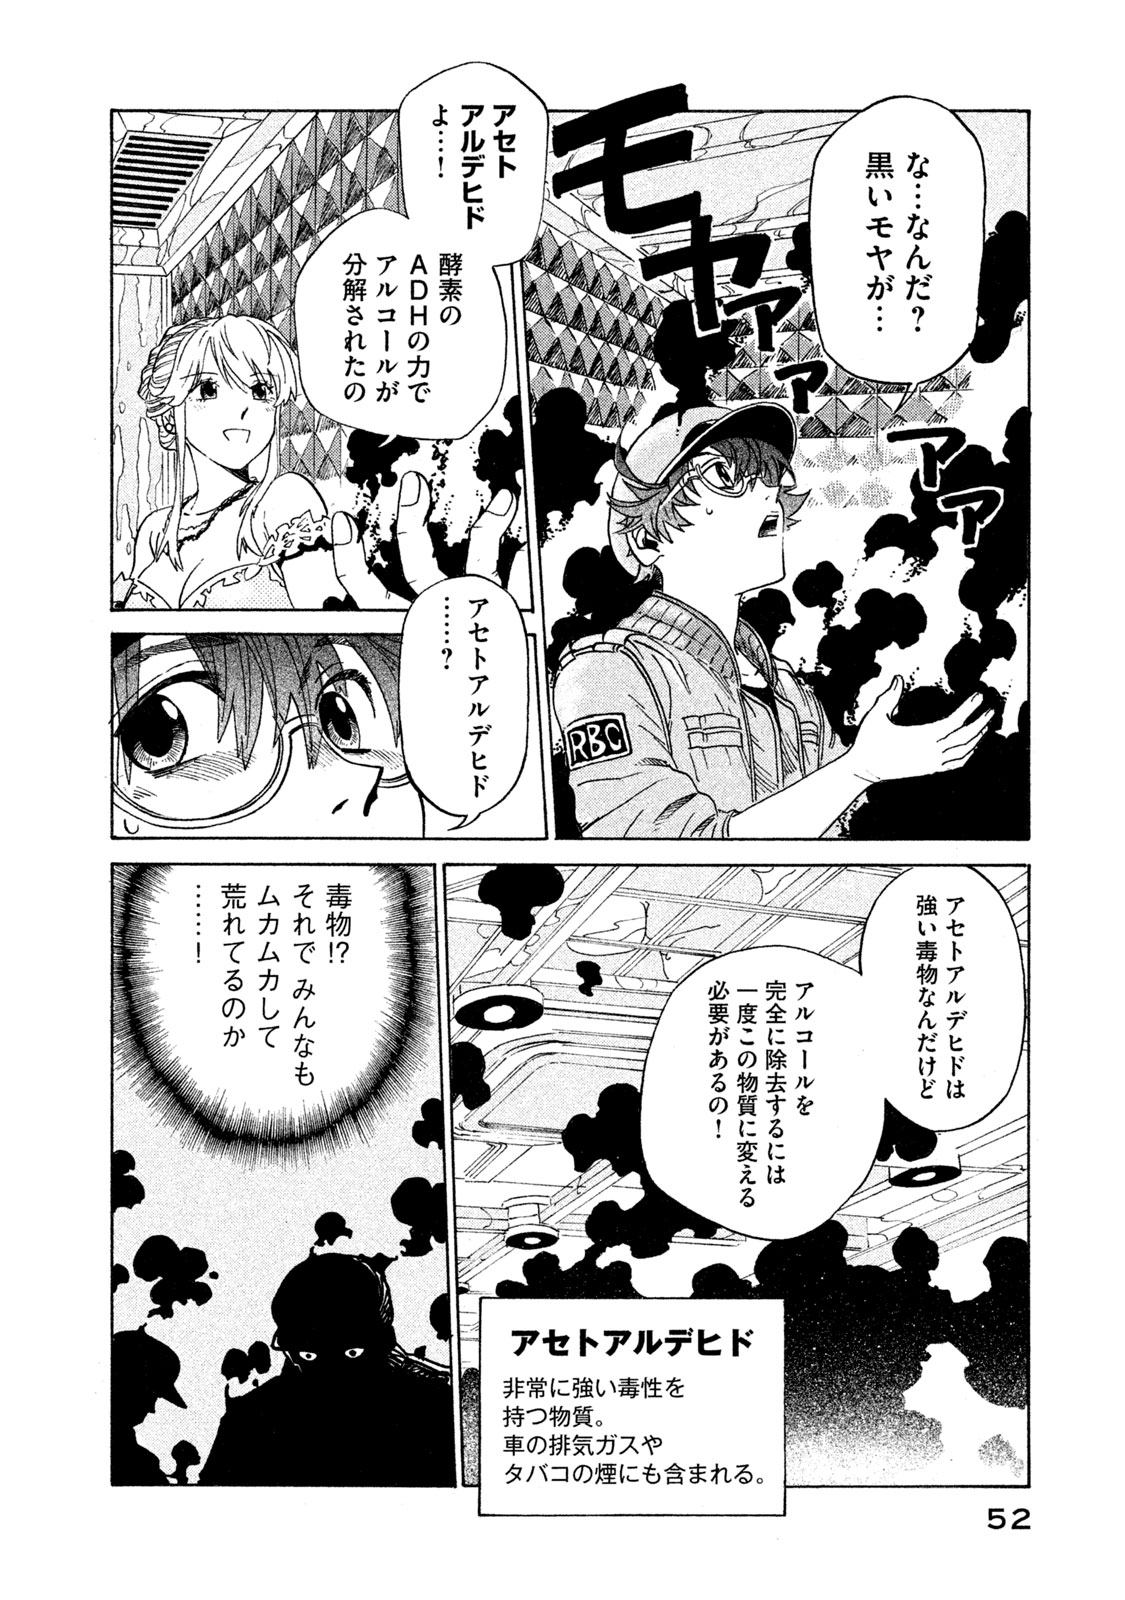 Hataraku Saibou BLACK - Chapter 2 - Page 16